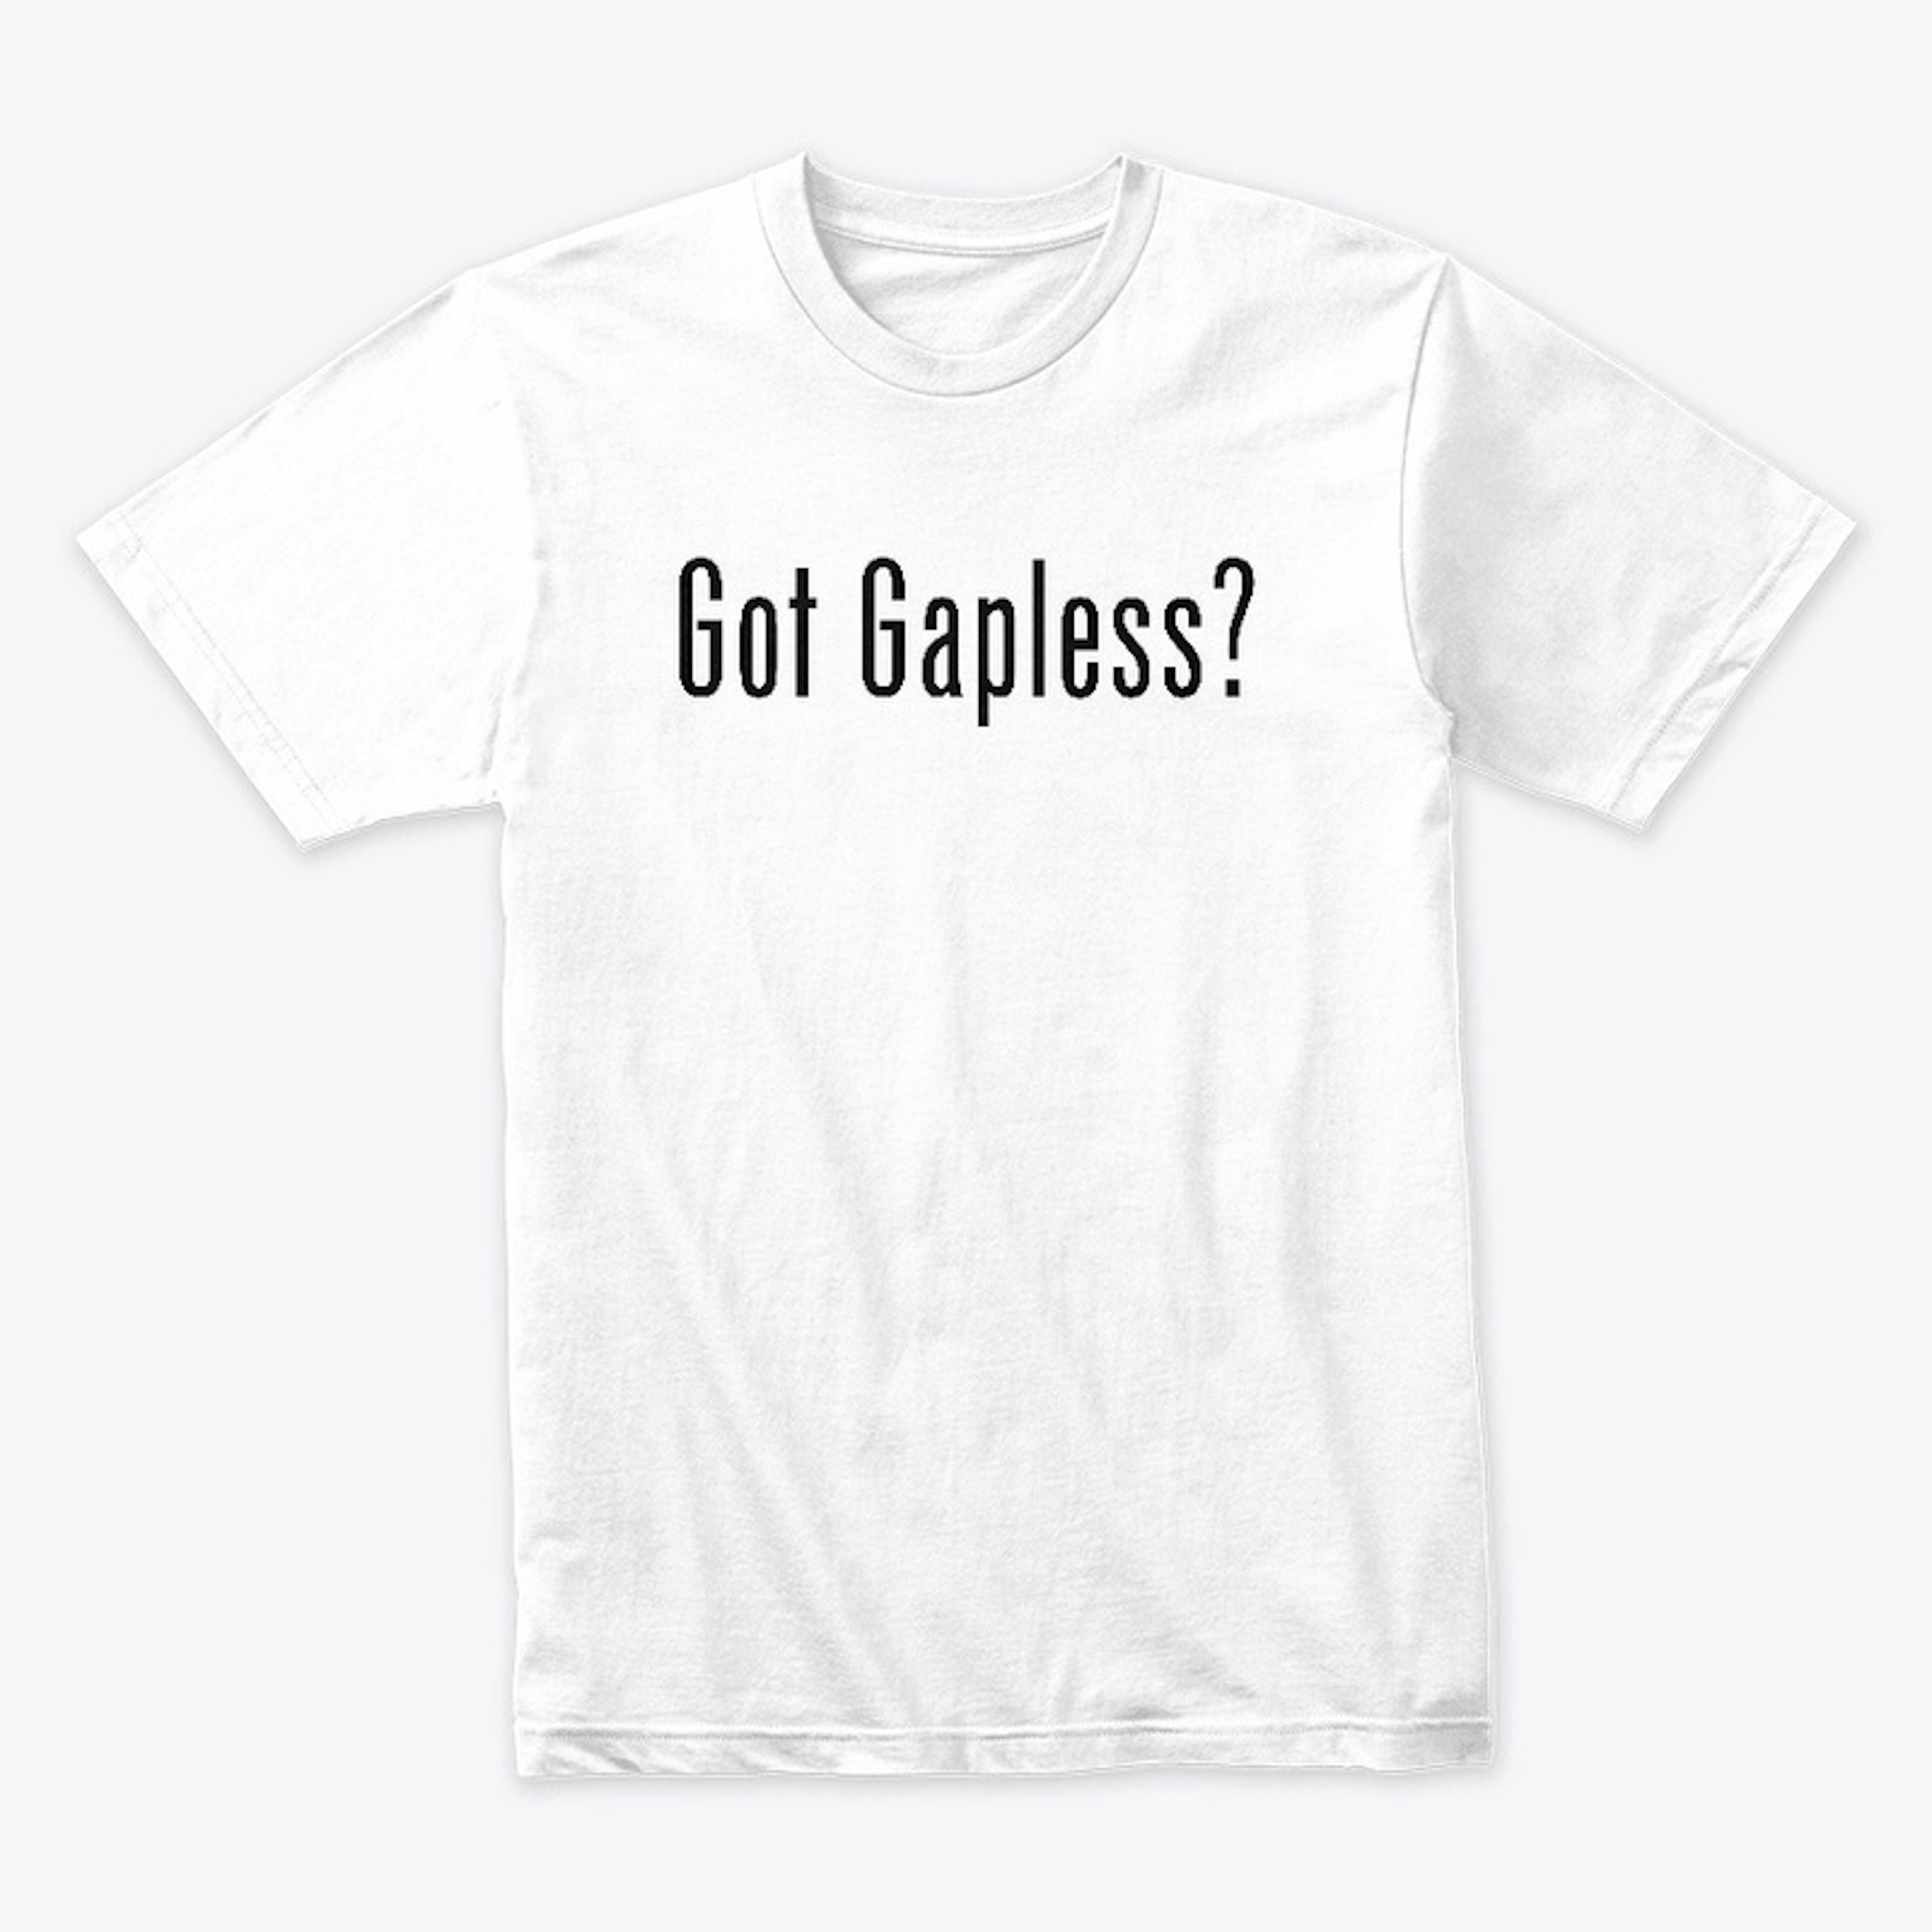 Got Gapless?